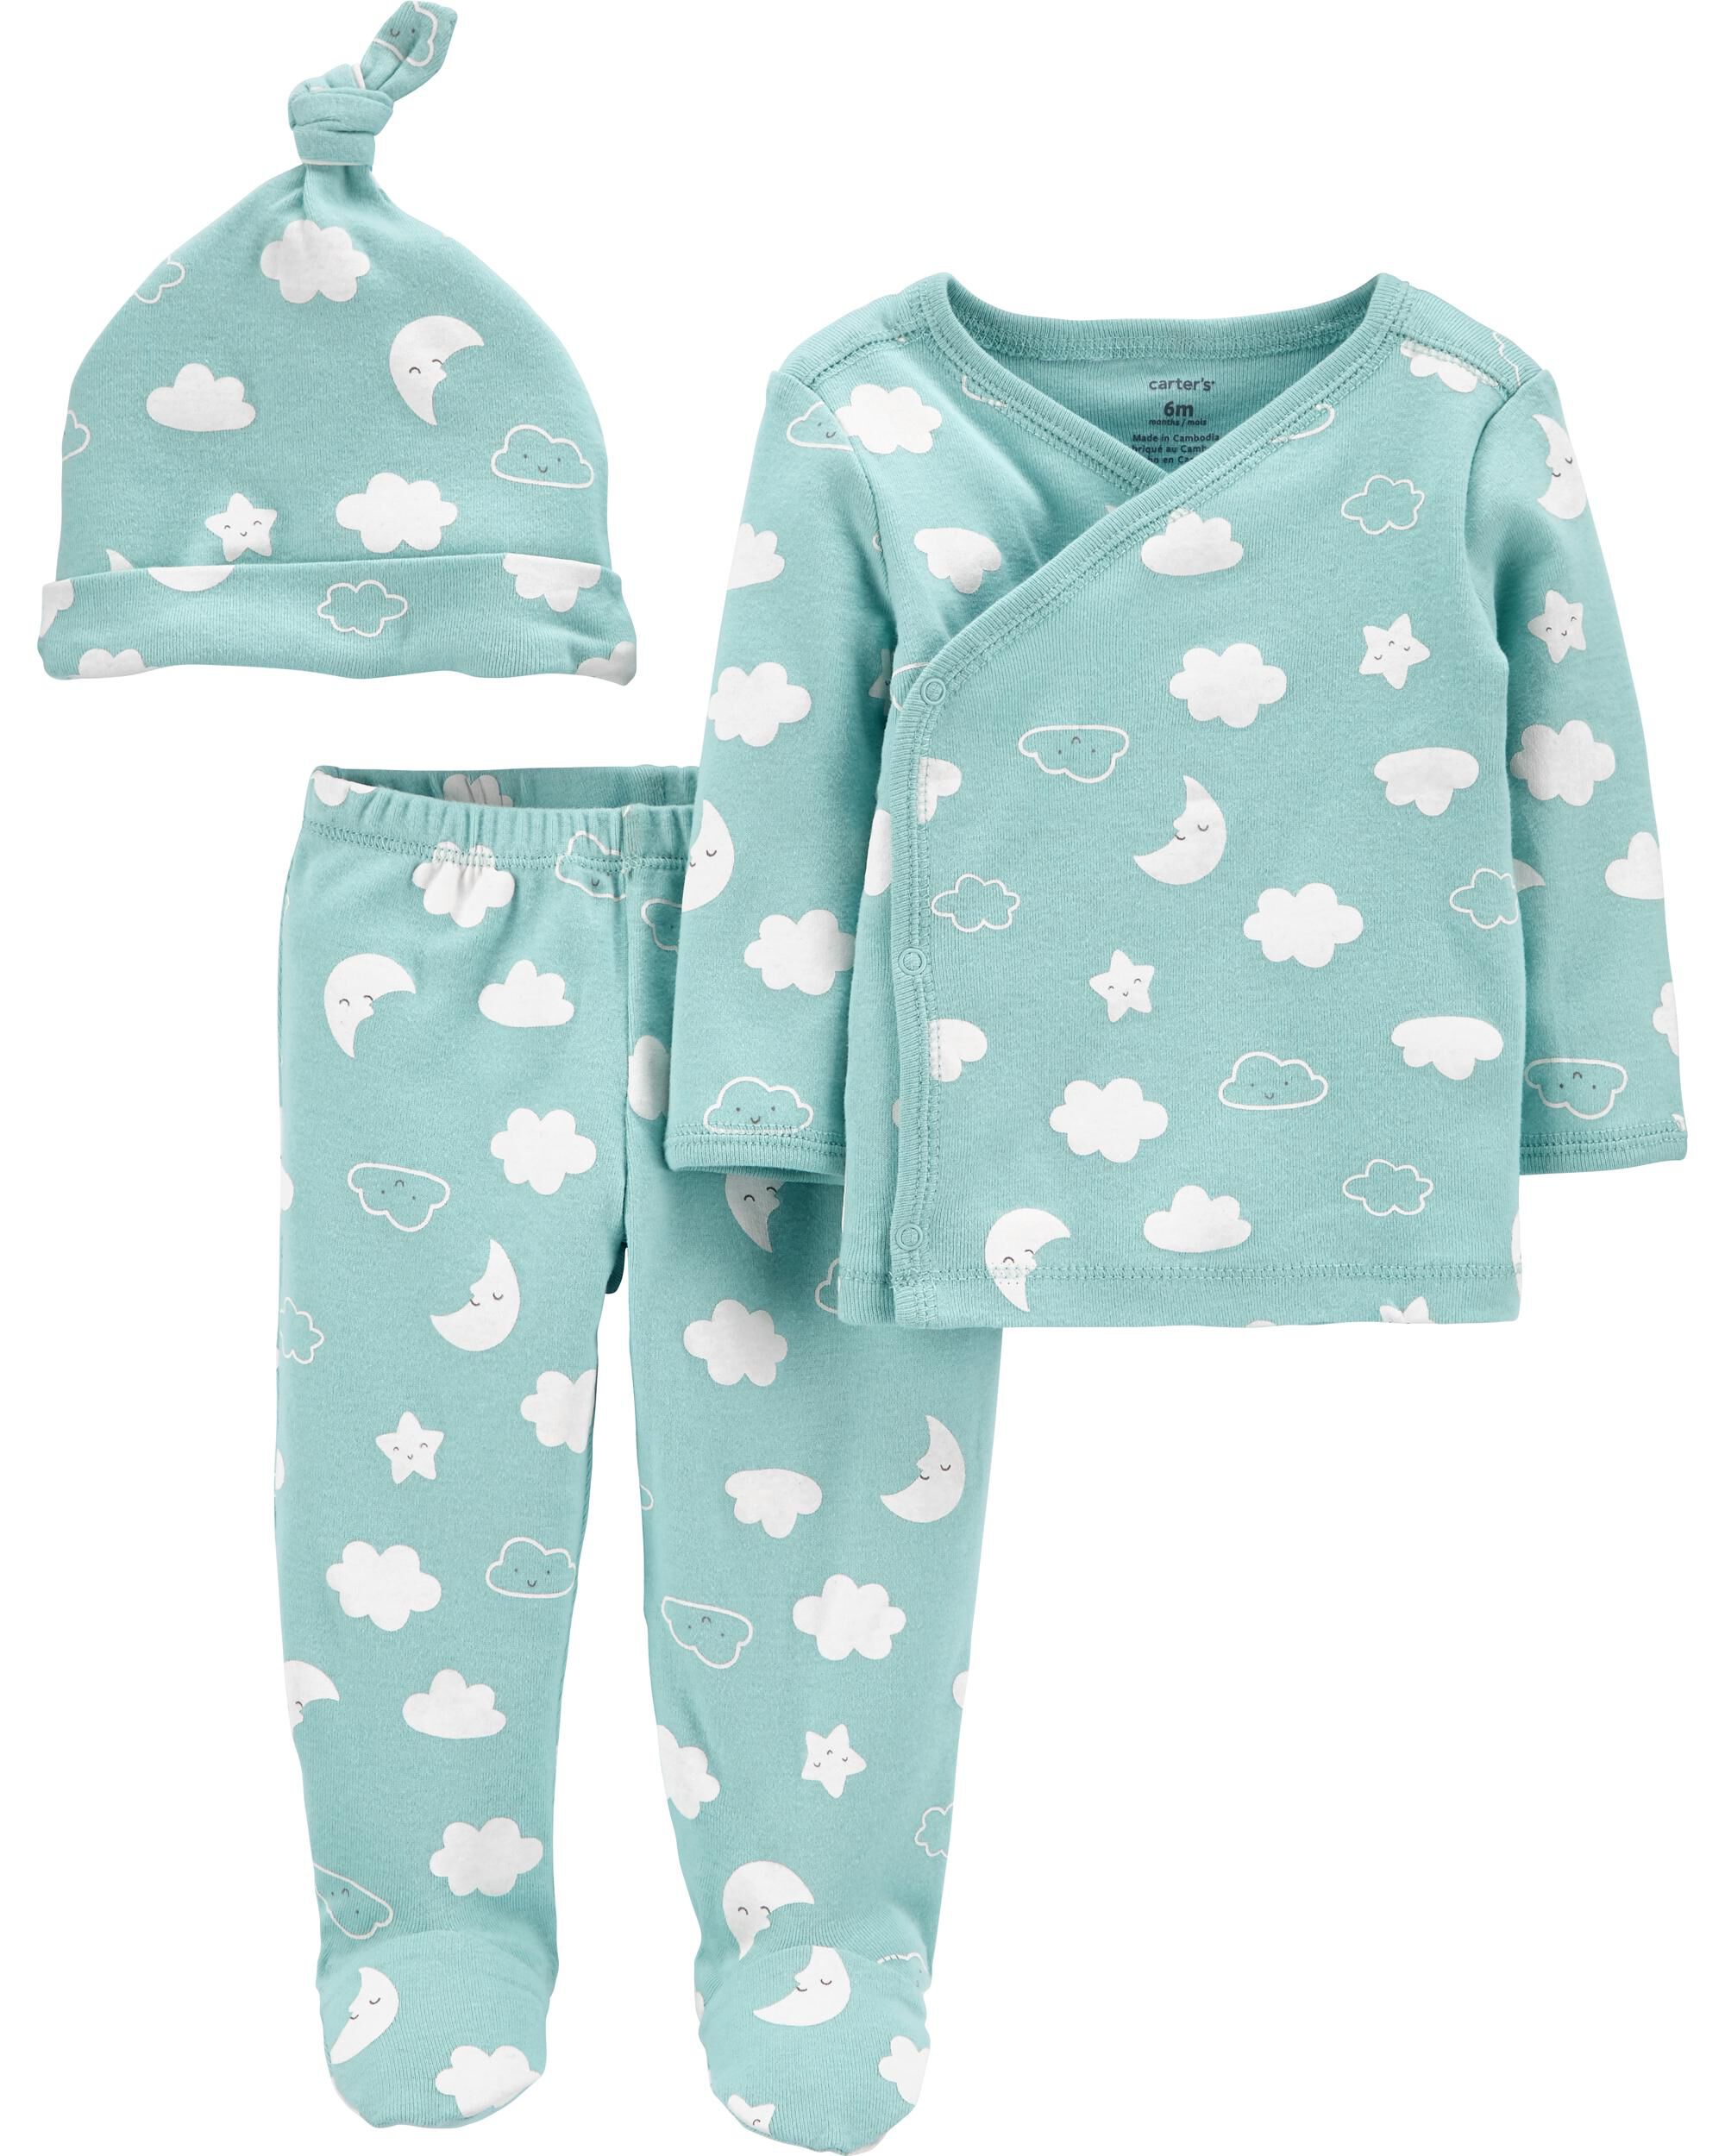 NWT CARTER'S Baby Girls Blanket Sleeper Footed Pajamas Sz 2T 2 Sleep PJs Toddler 